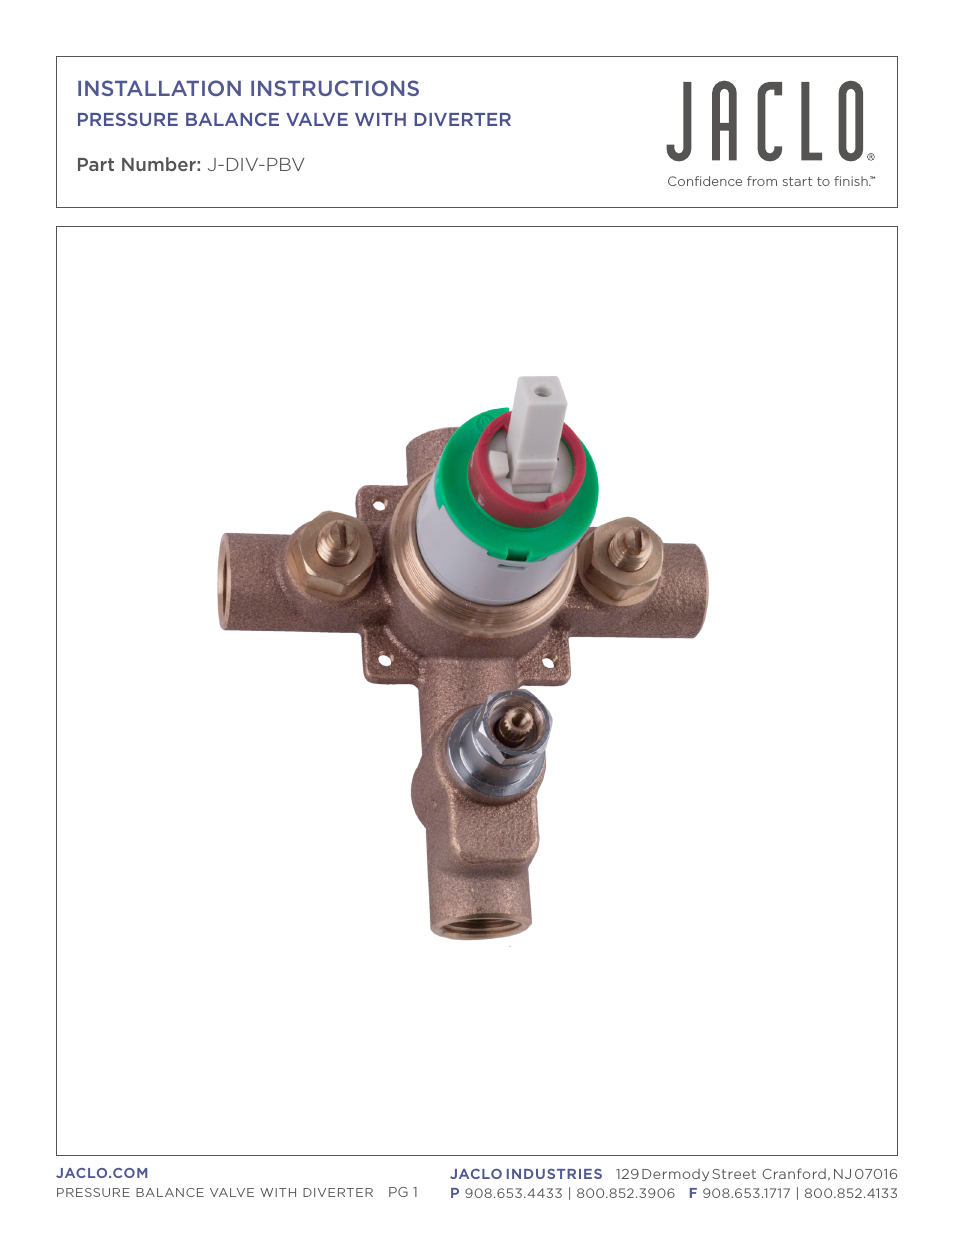 Pressure balance valve with diverter - A275-